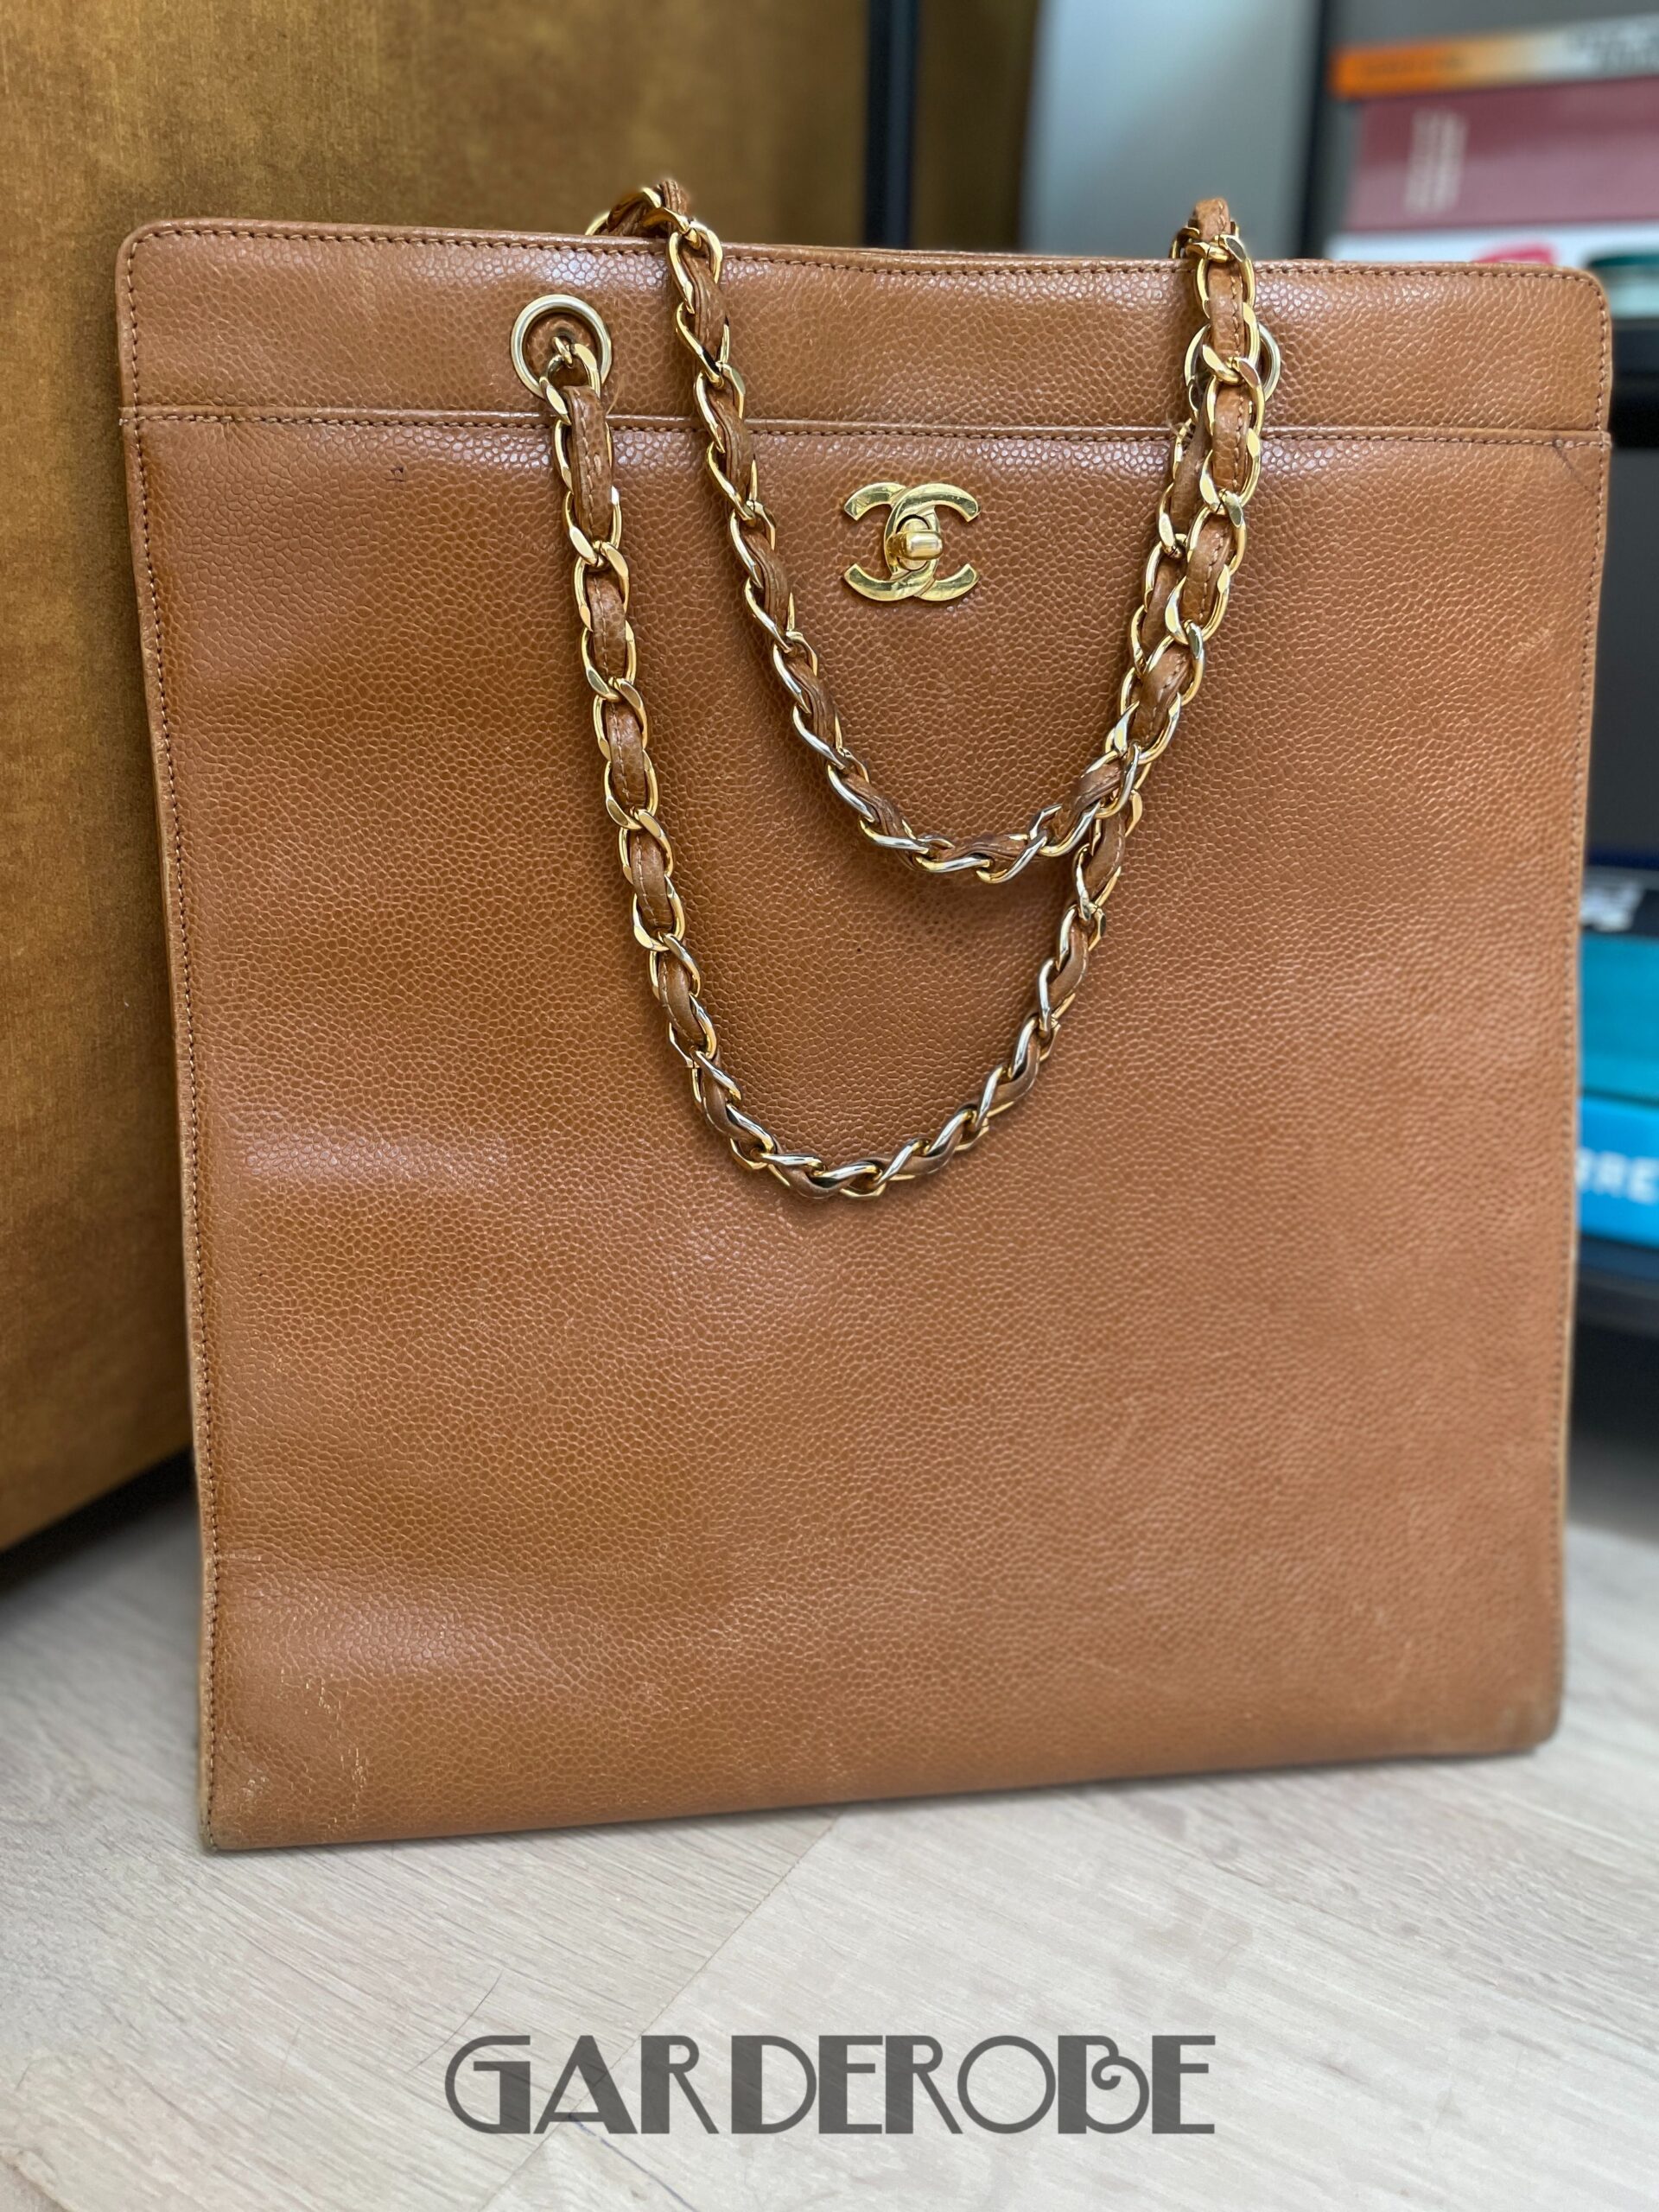 Vintage Chanel tote shopping bag